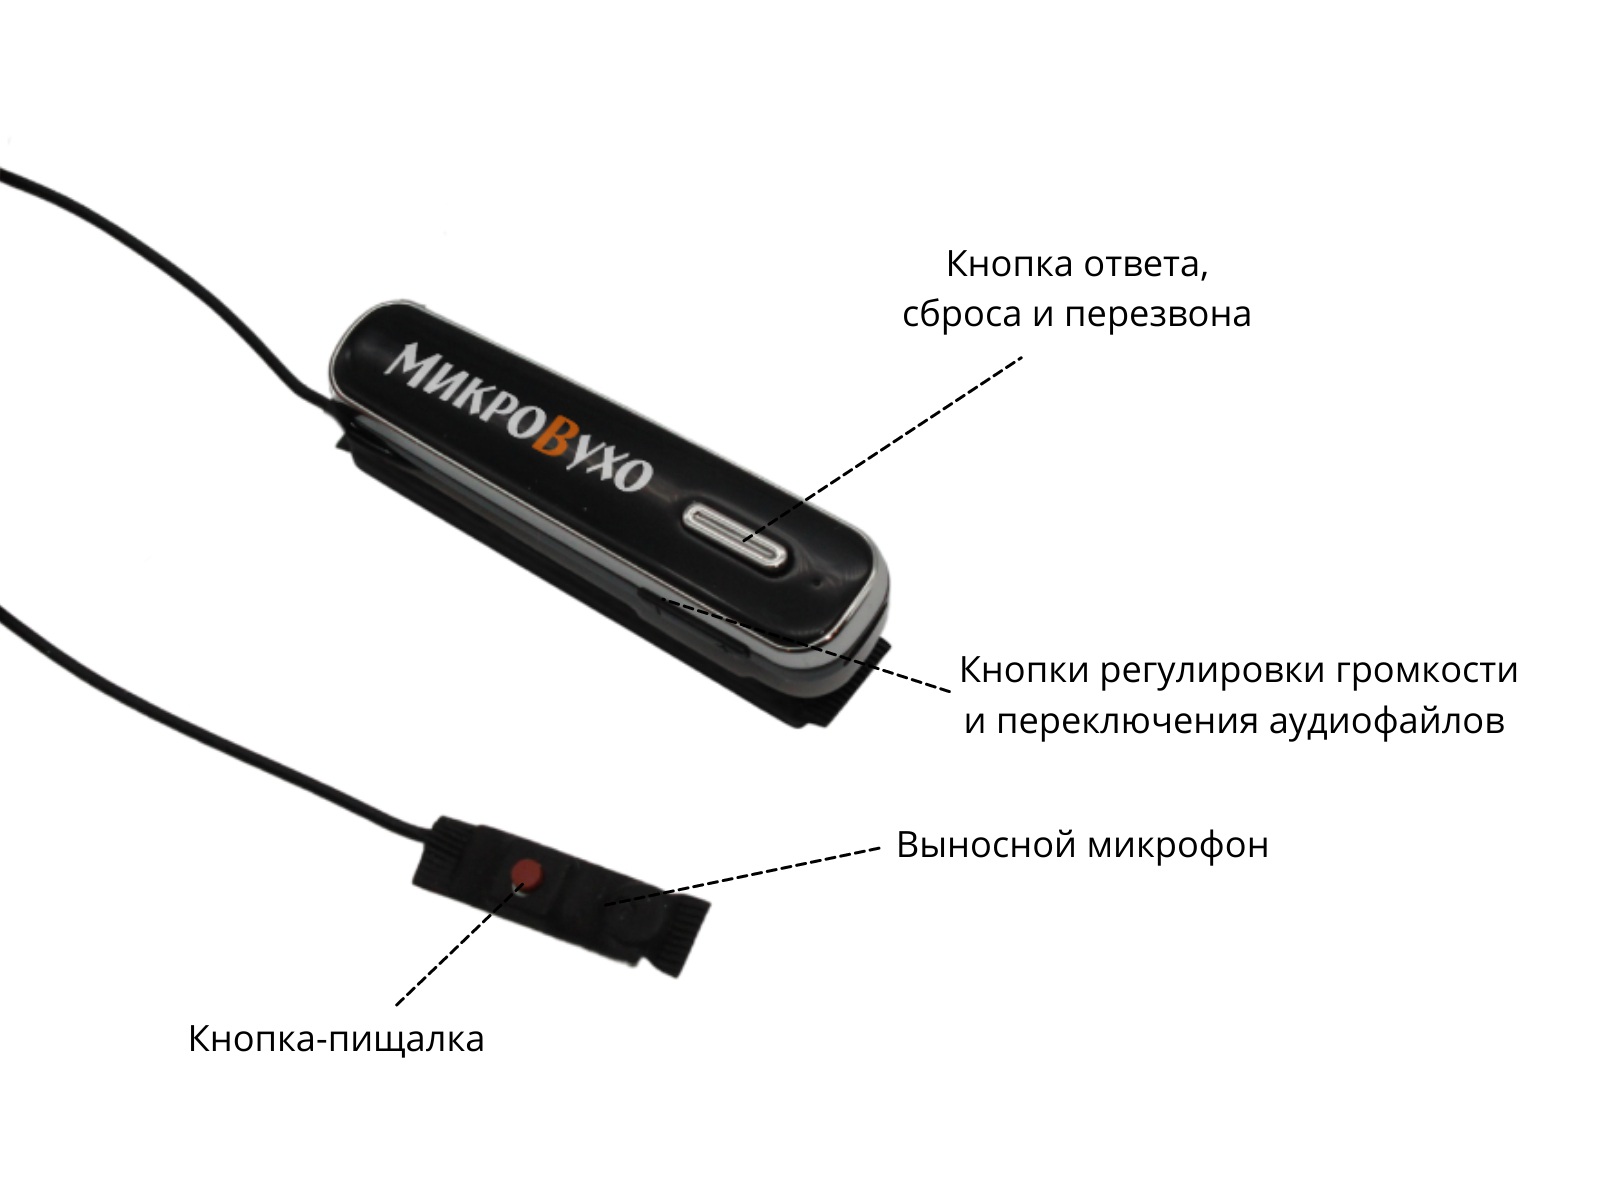 Bluetooth Box Premier Lite Plus c кнопкой-пищалкой и магнитами 2 мм